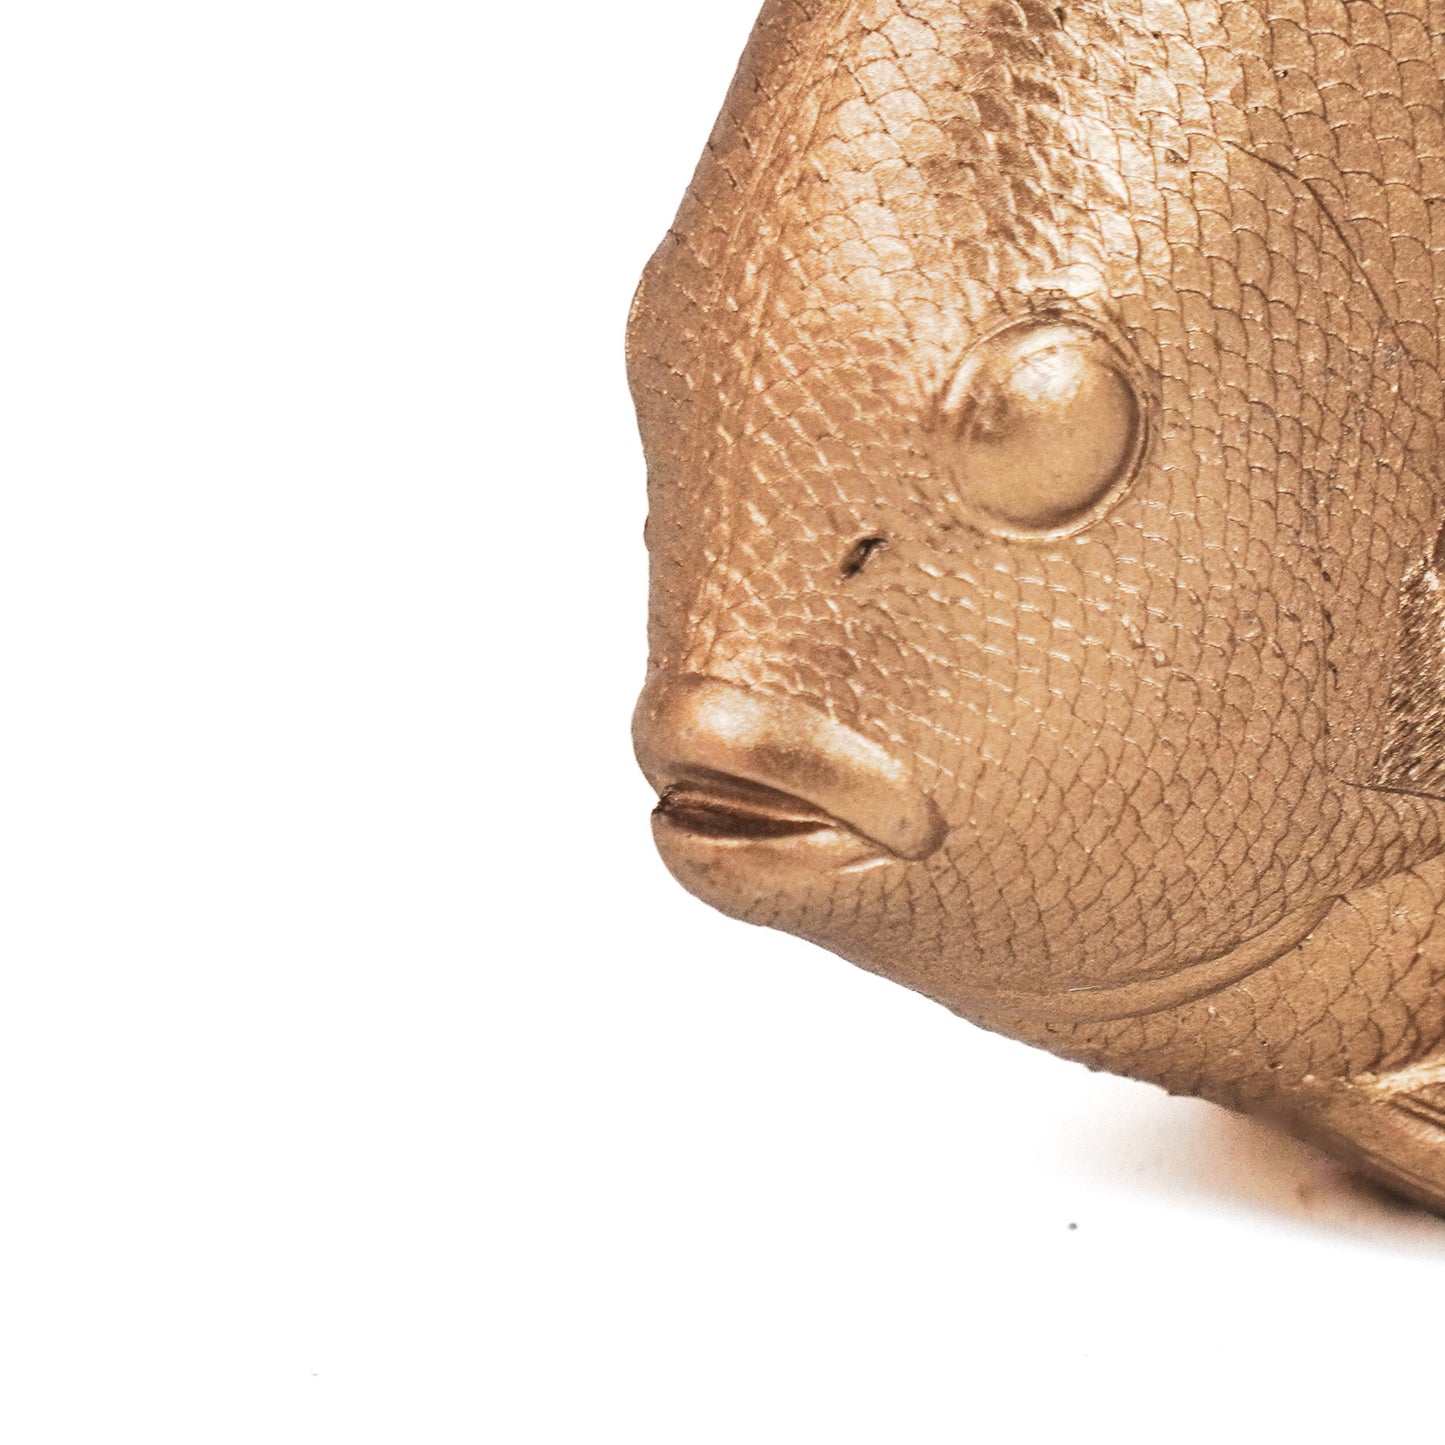 HV Flat Fish - Gold- 19.5x10.5x16 cm